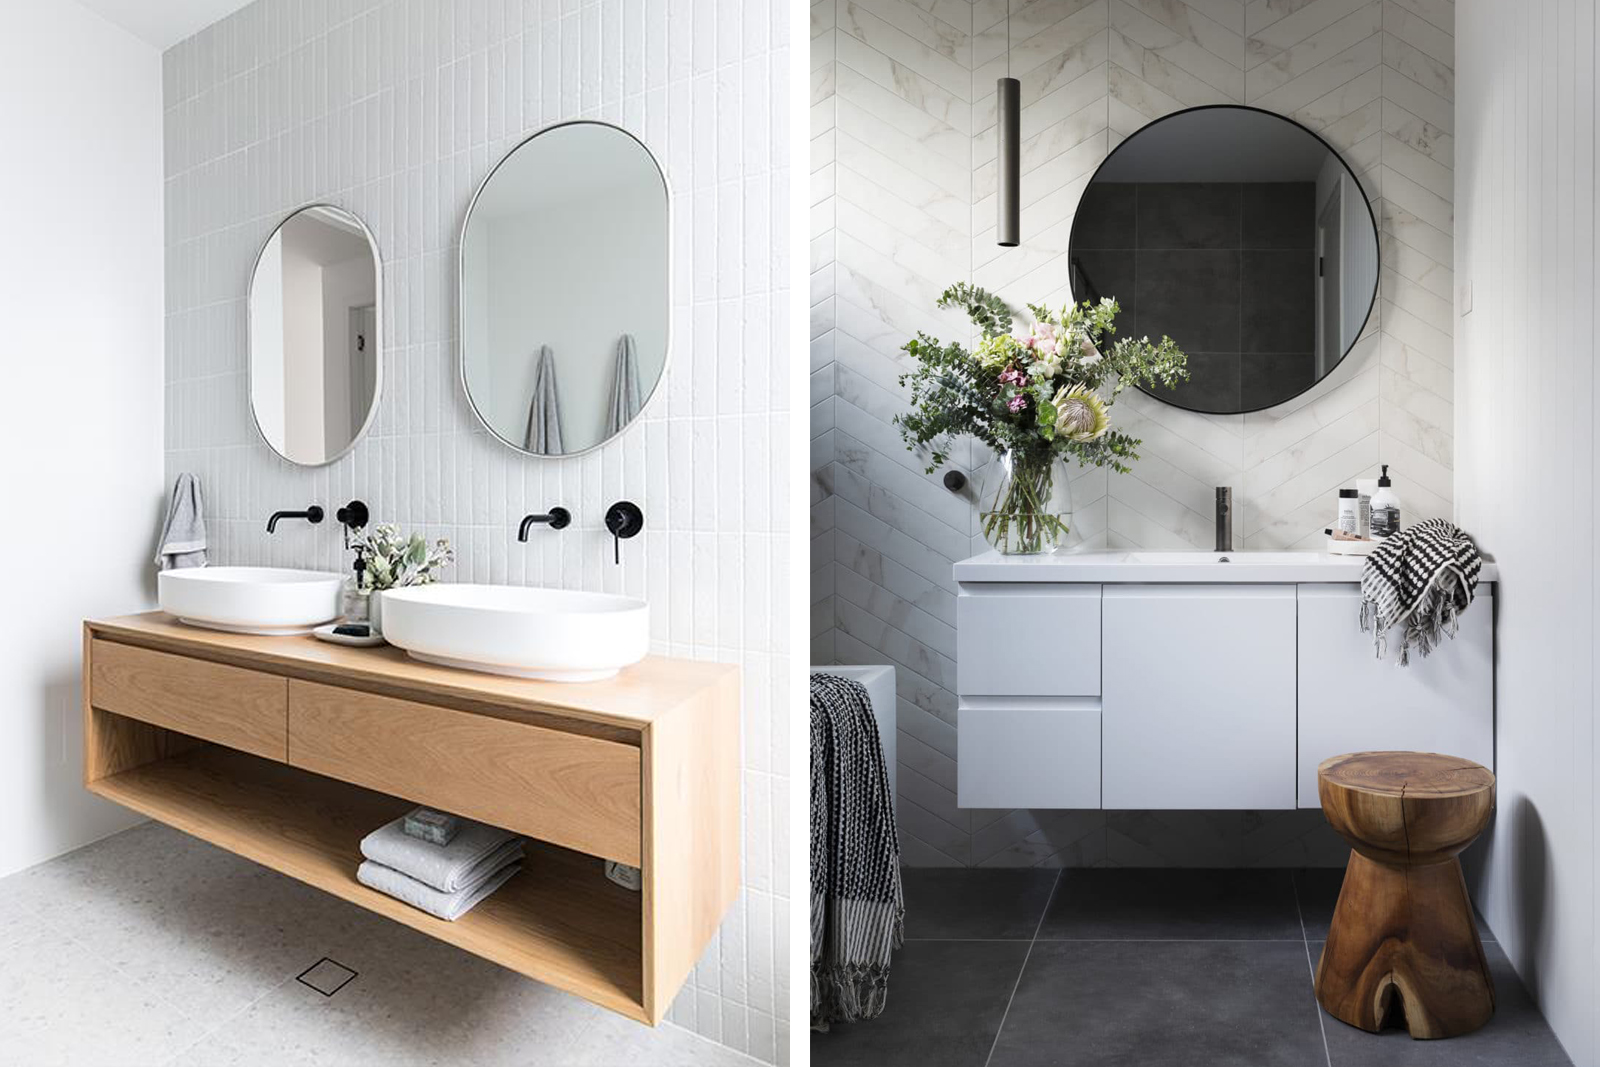 Cherie-Barber_Renovating-For-Profit_Small-Bathrooms-vanity